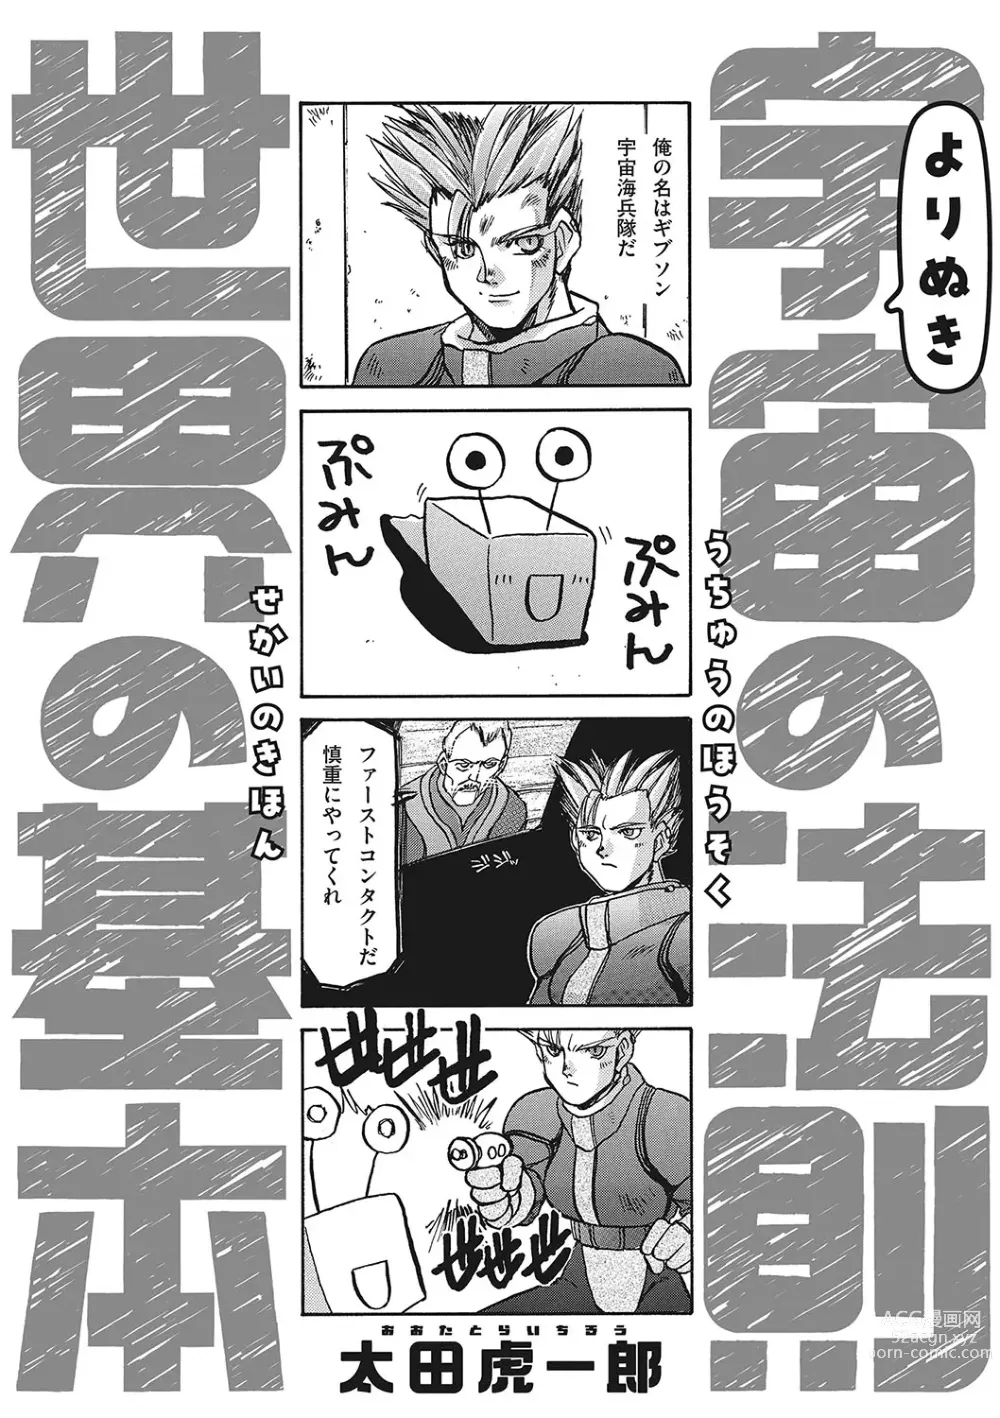 Page 99 of manga Little Girl Strike Vol. 30